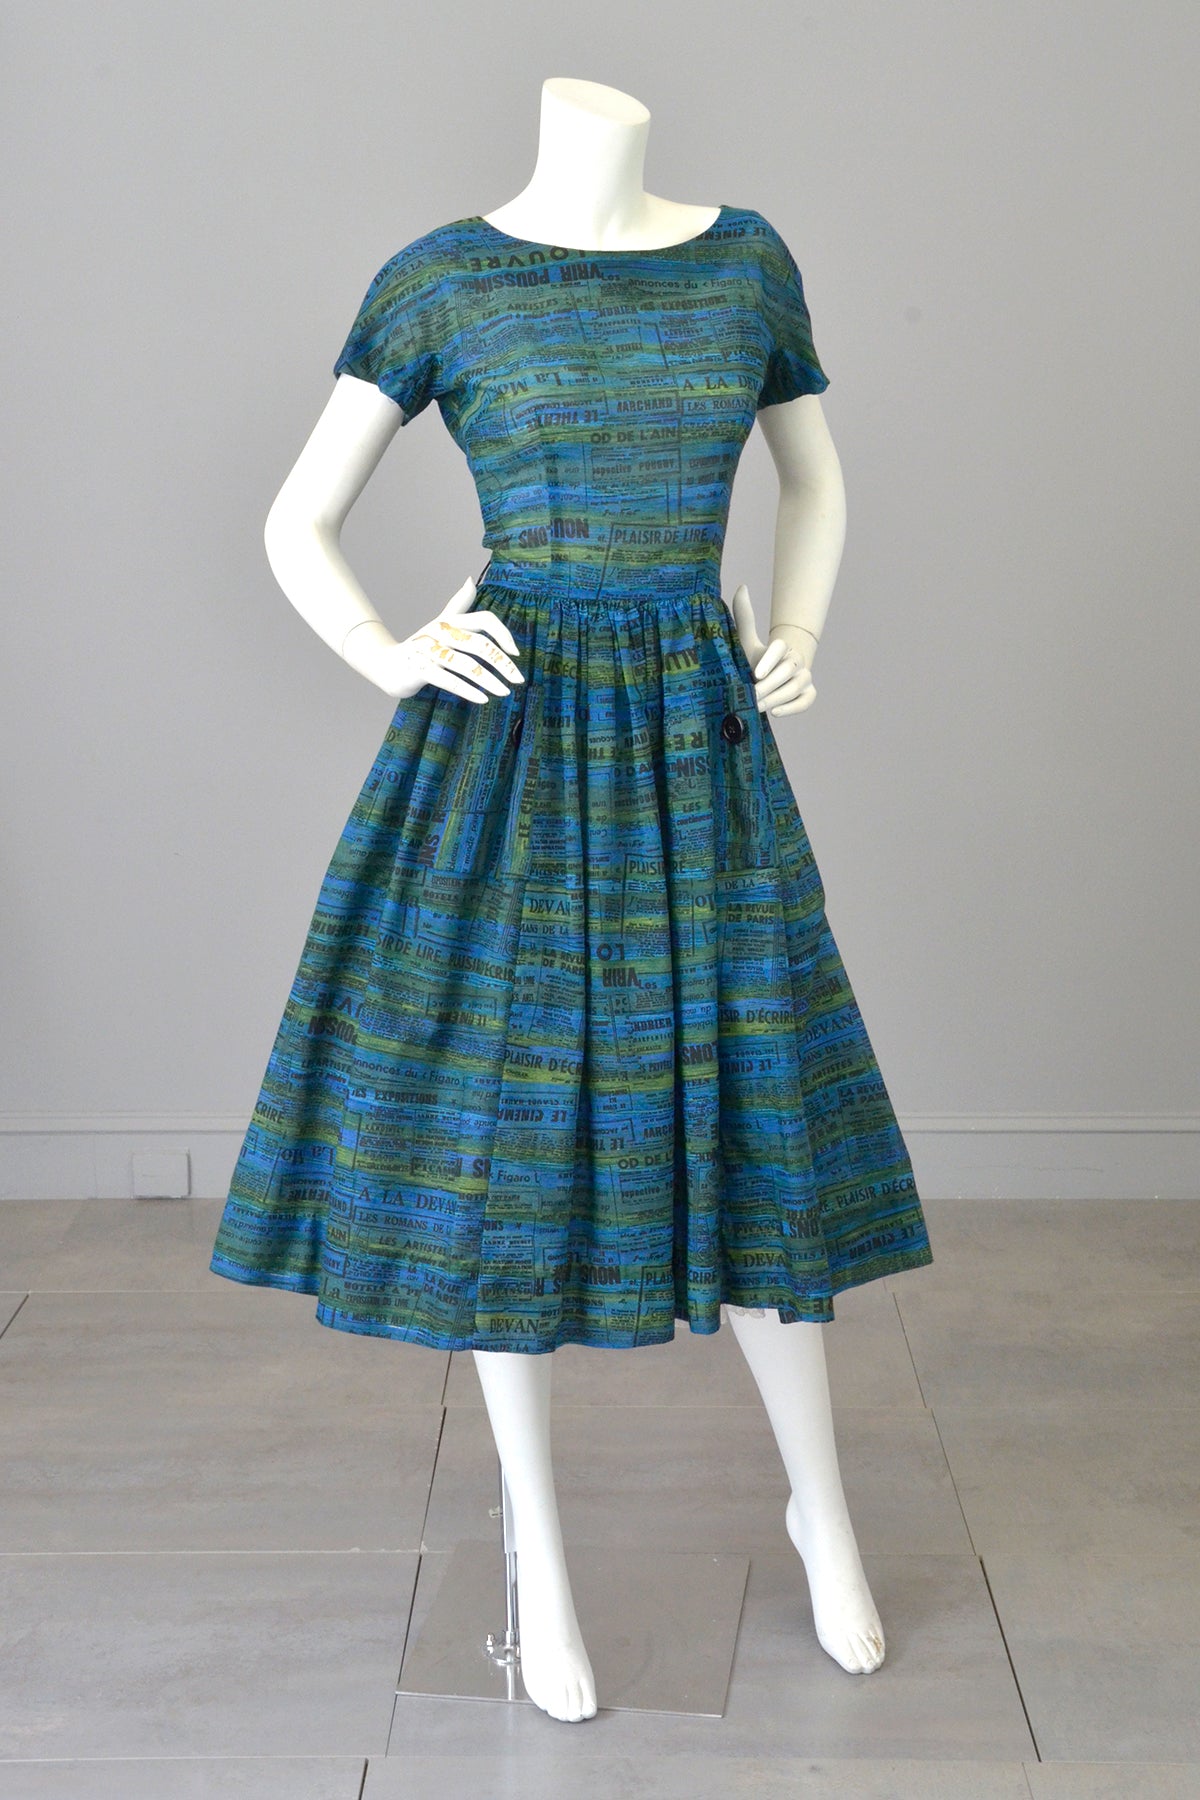 1950s Novelty Print Dress of French Newspaper Advertisements, Pockets, Full Skirt